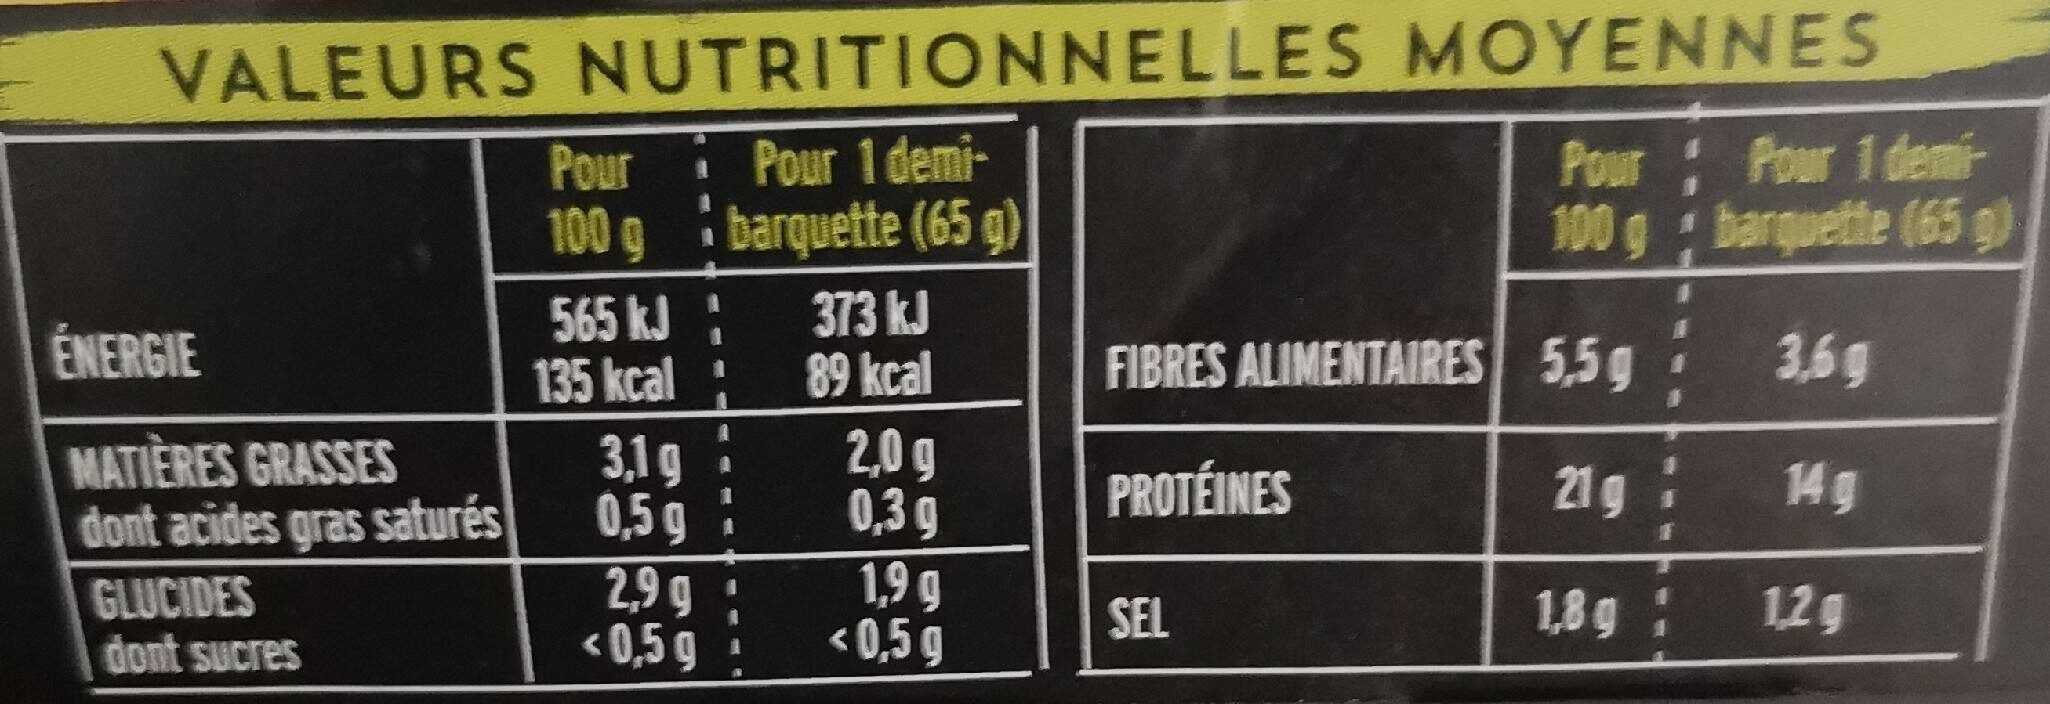 Émincés Soja et Blé - Informació nutricional - fr